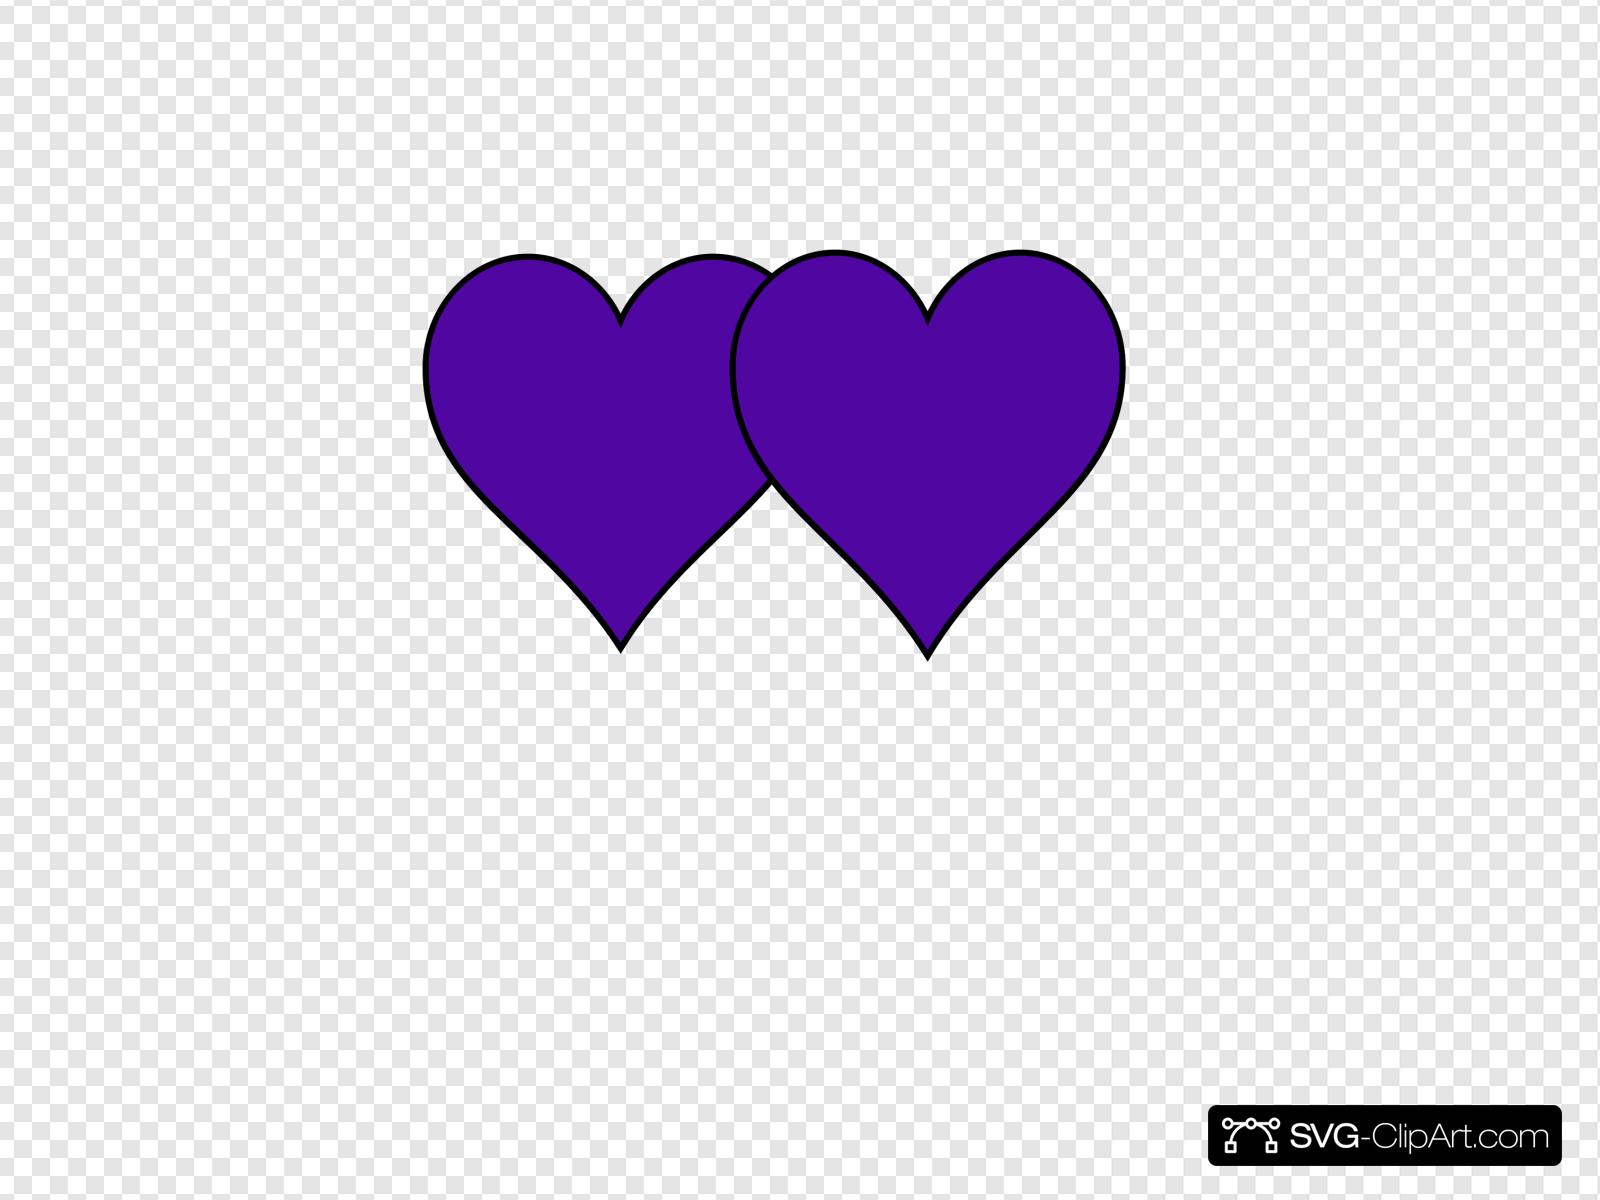 Two Purple Hearts Clip art, Icon and SVG.